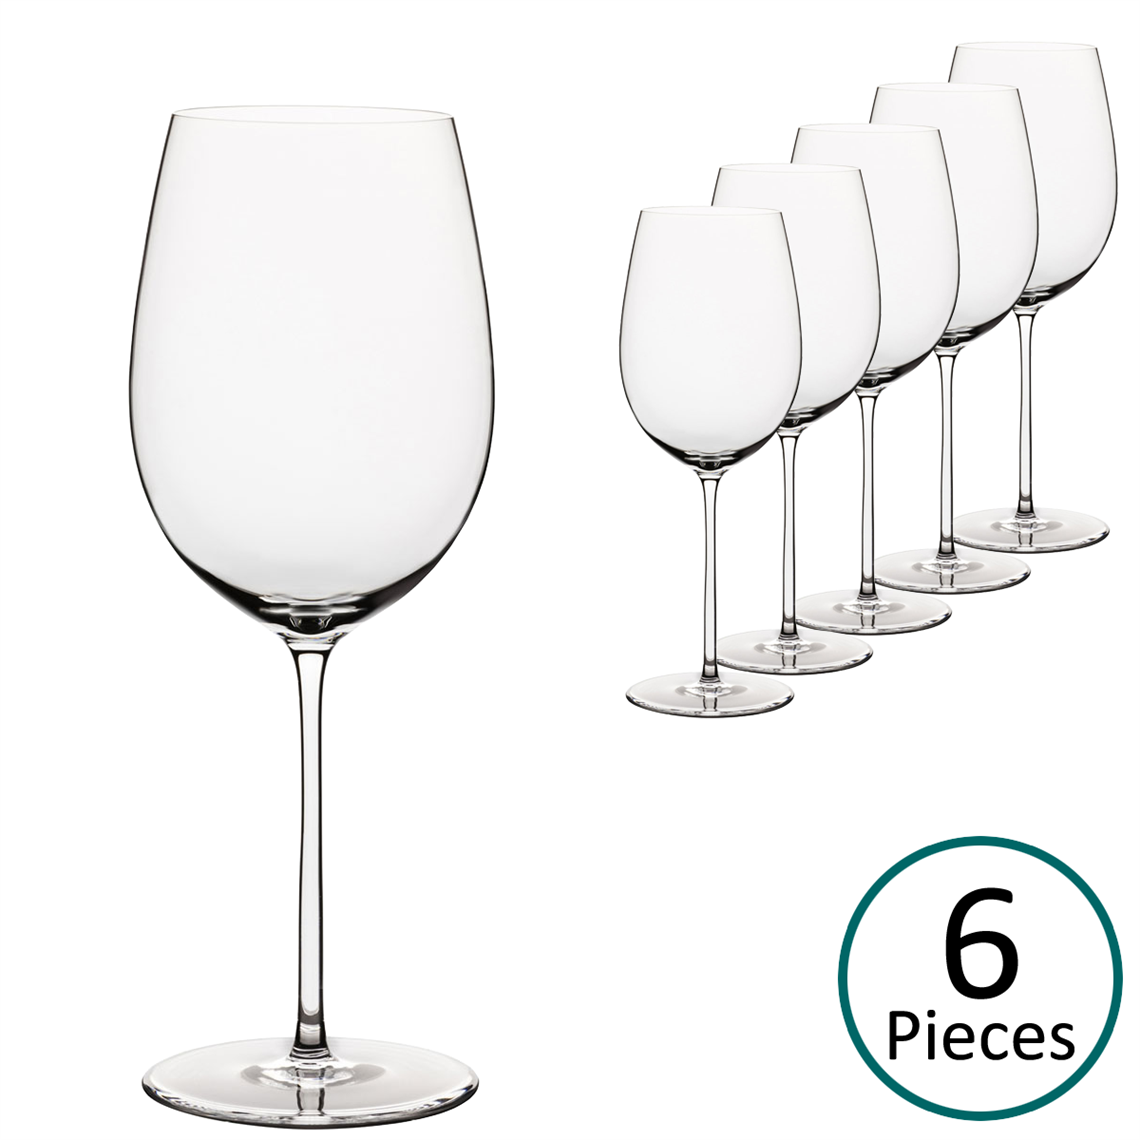 Elia Leila Crystal White Wine Glass - Set of 6